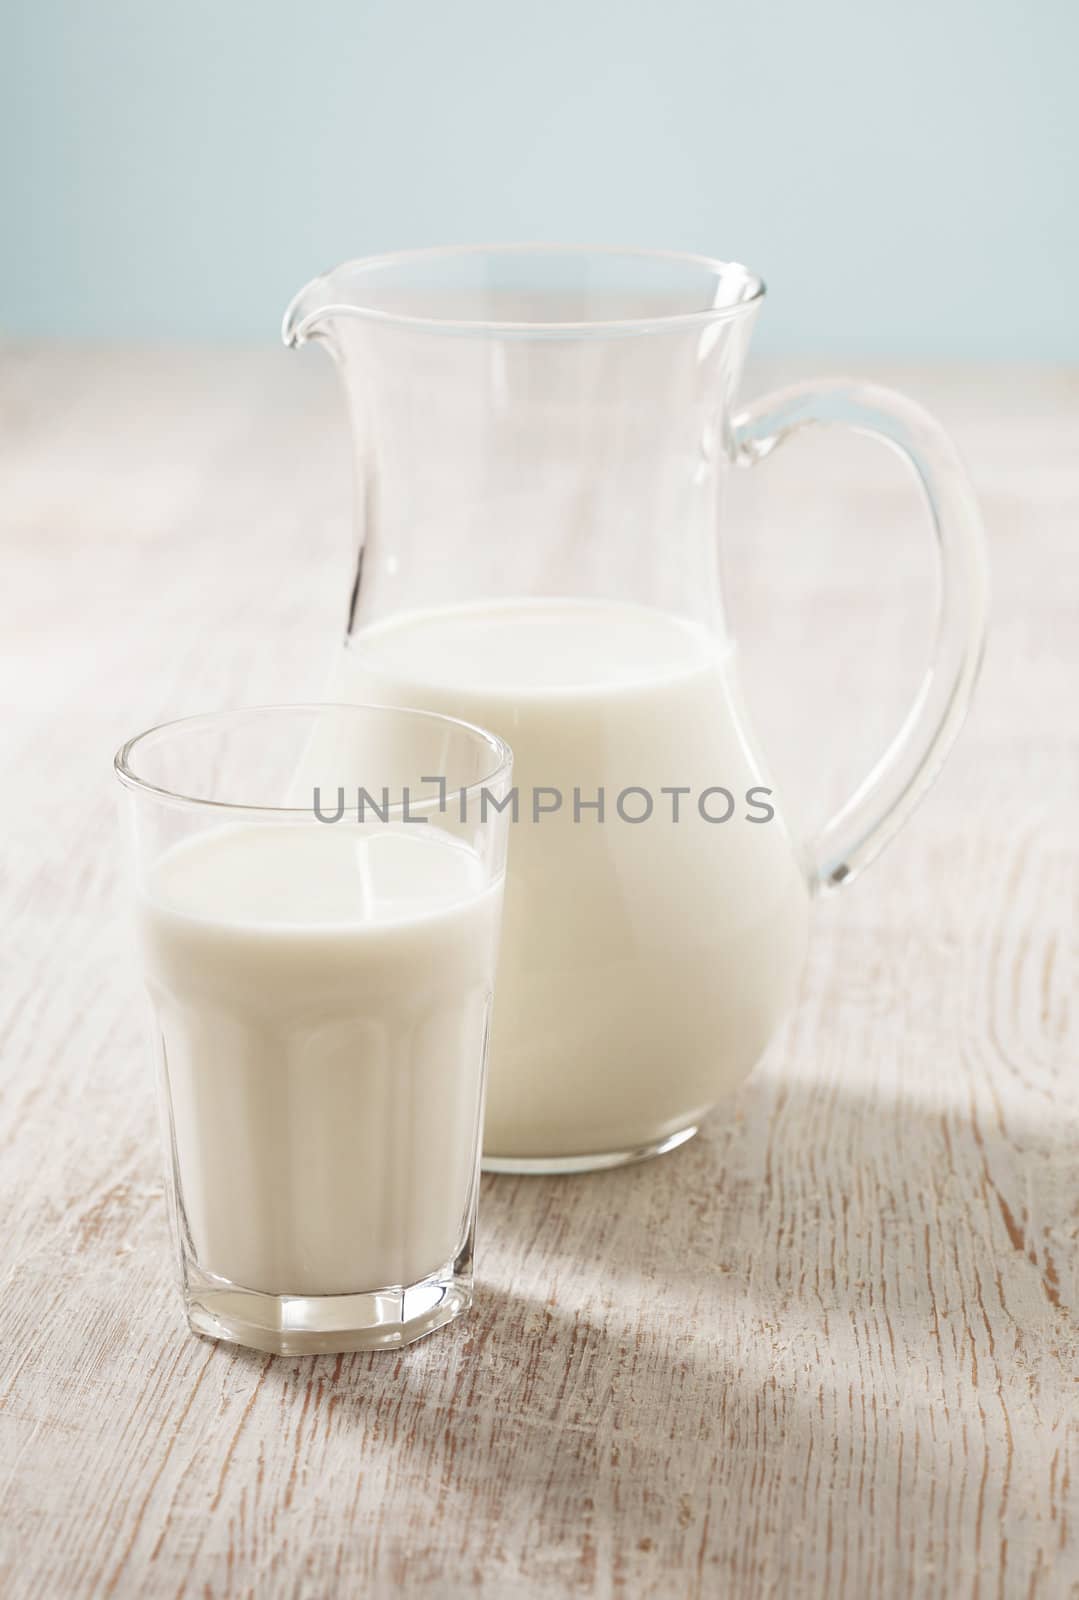 Milk by Stocksnapper